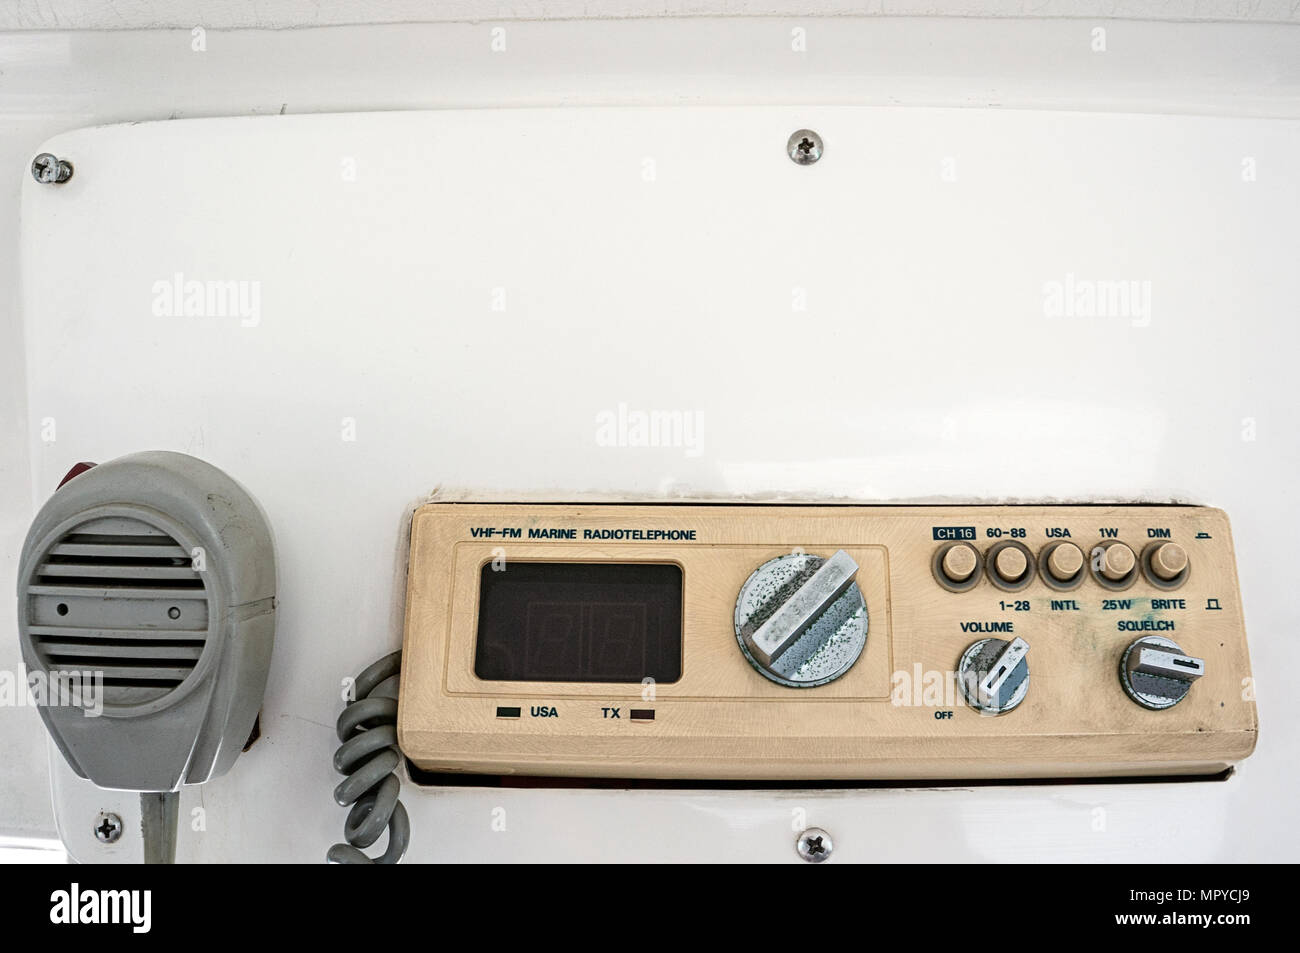 Marine Radio Telefon UKW-FM-Frequenz nautischen Kommunikation Technologie  Stockfotografie - Alamy